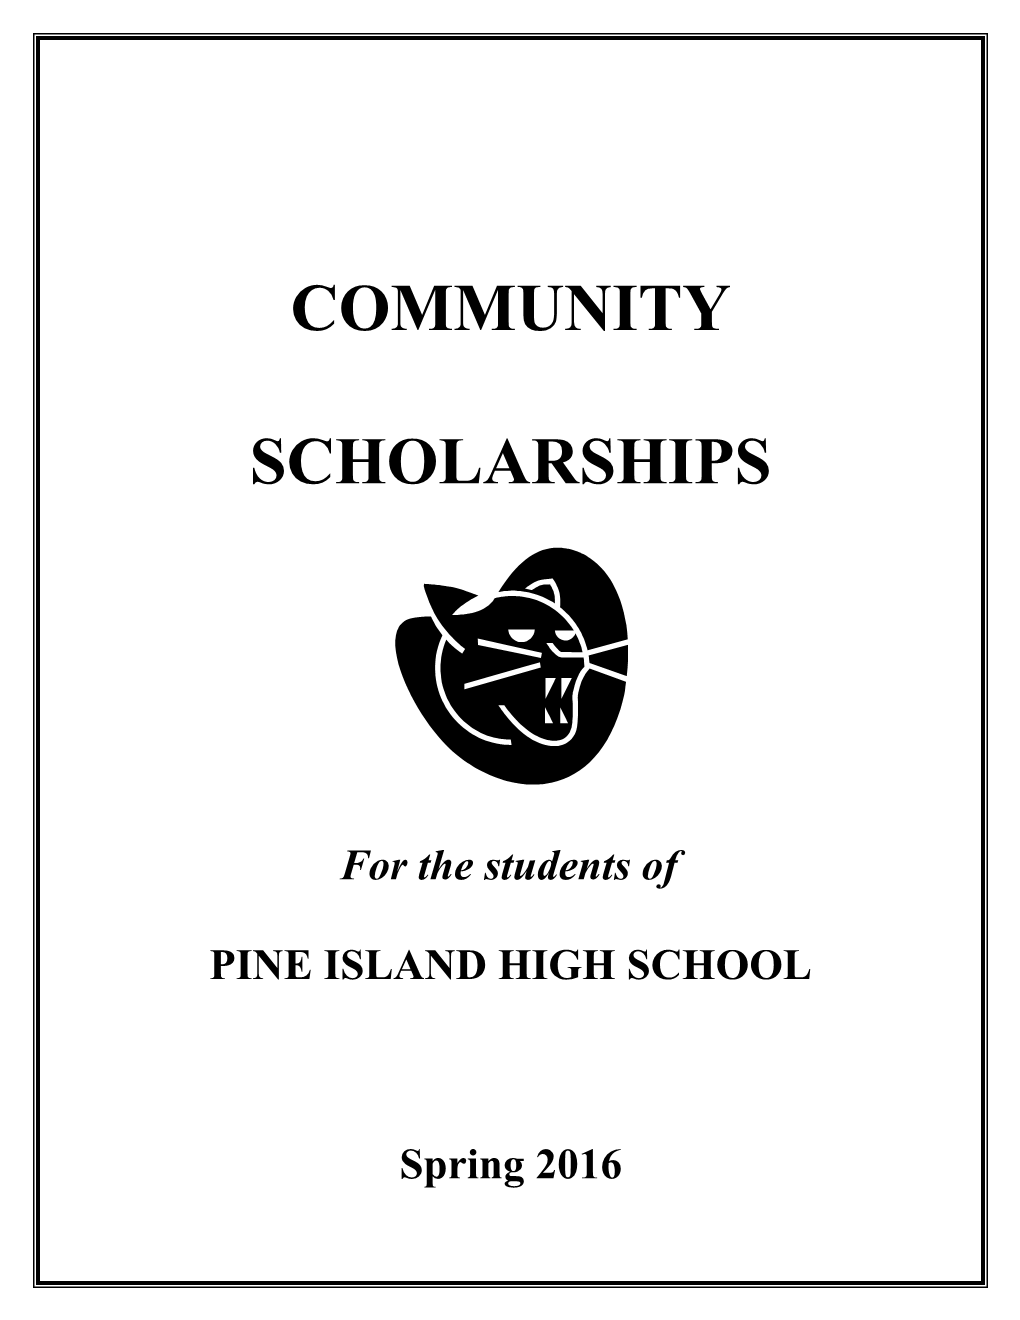 Pine Island High School